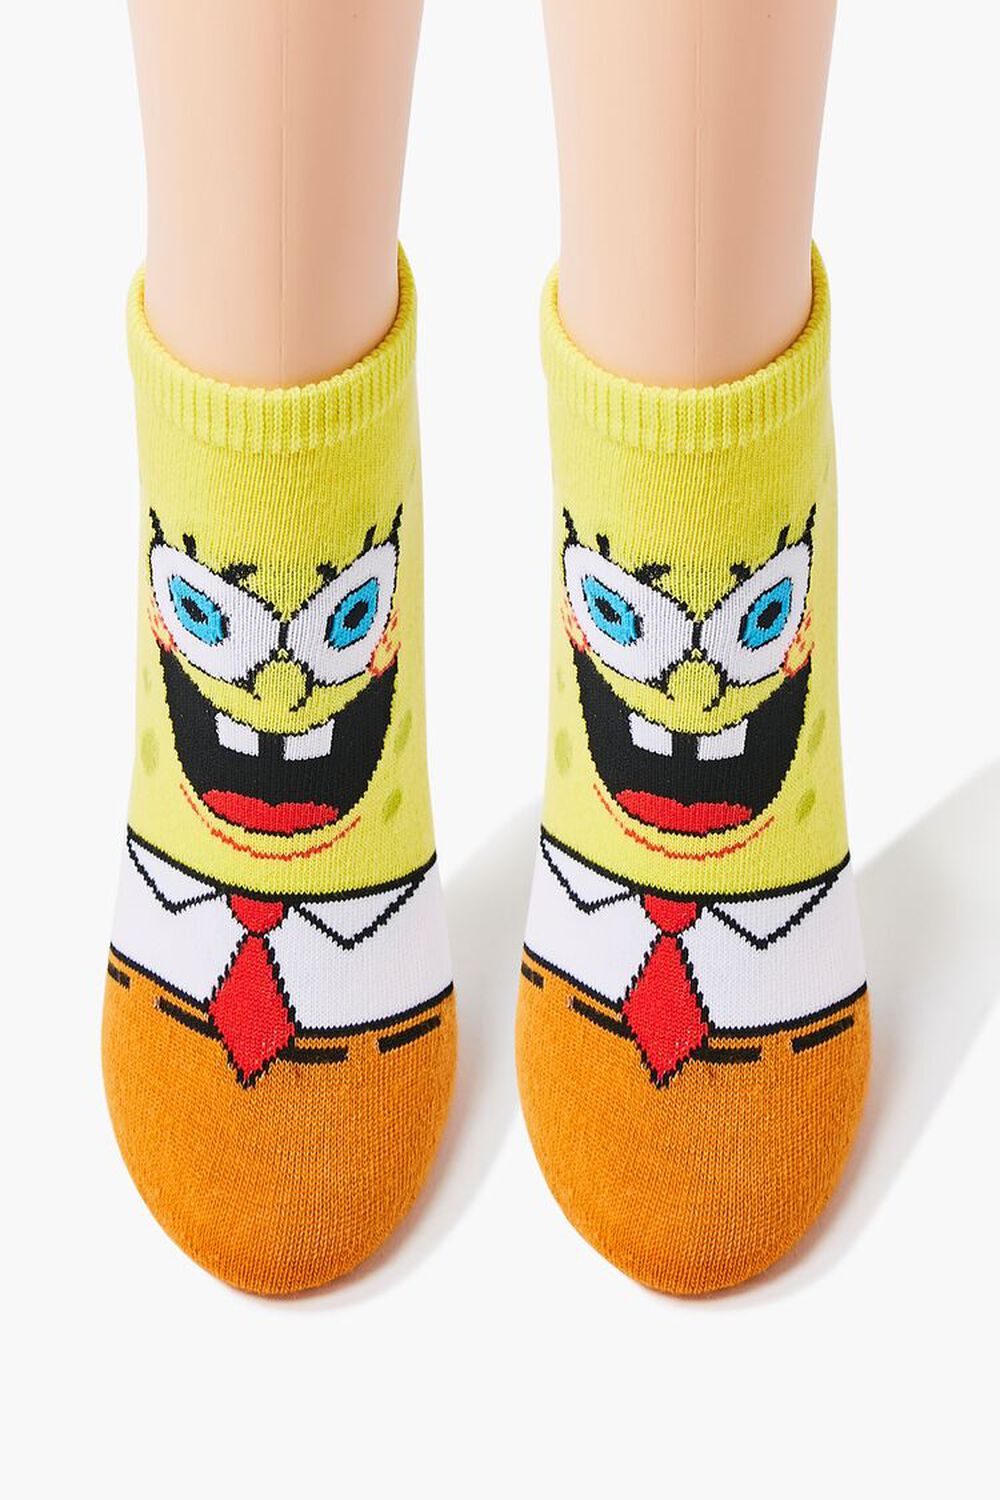 SpongeBob SquarePants Ankle Socks, image 2